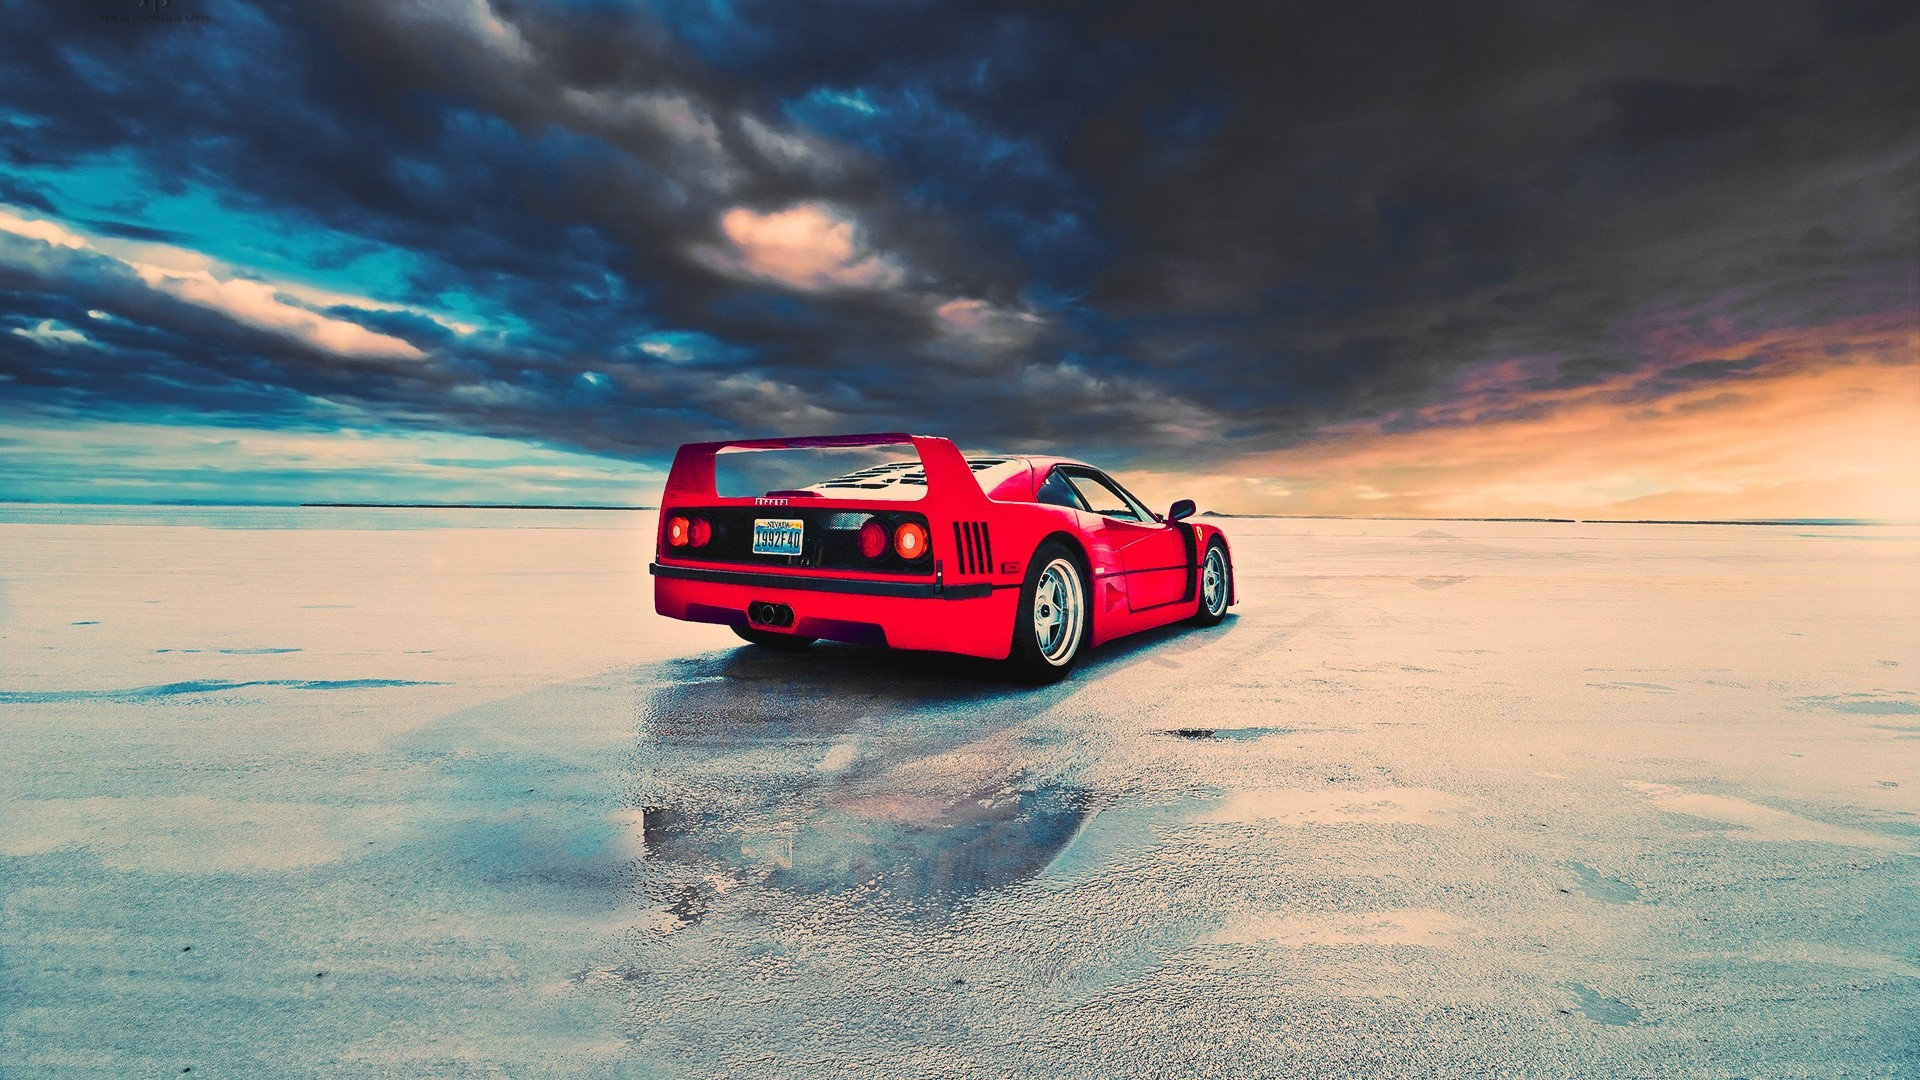 Free download Ferrari wallpaper ID:368033 1080p for PC